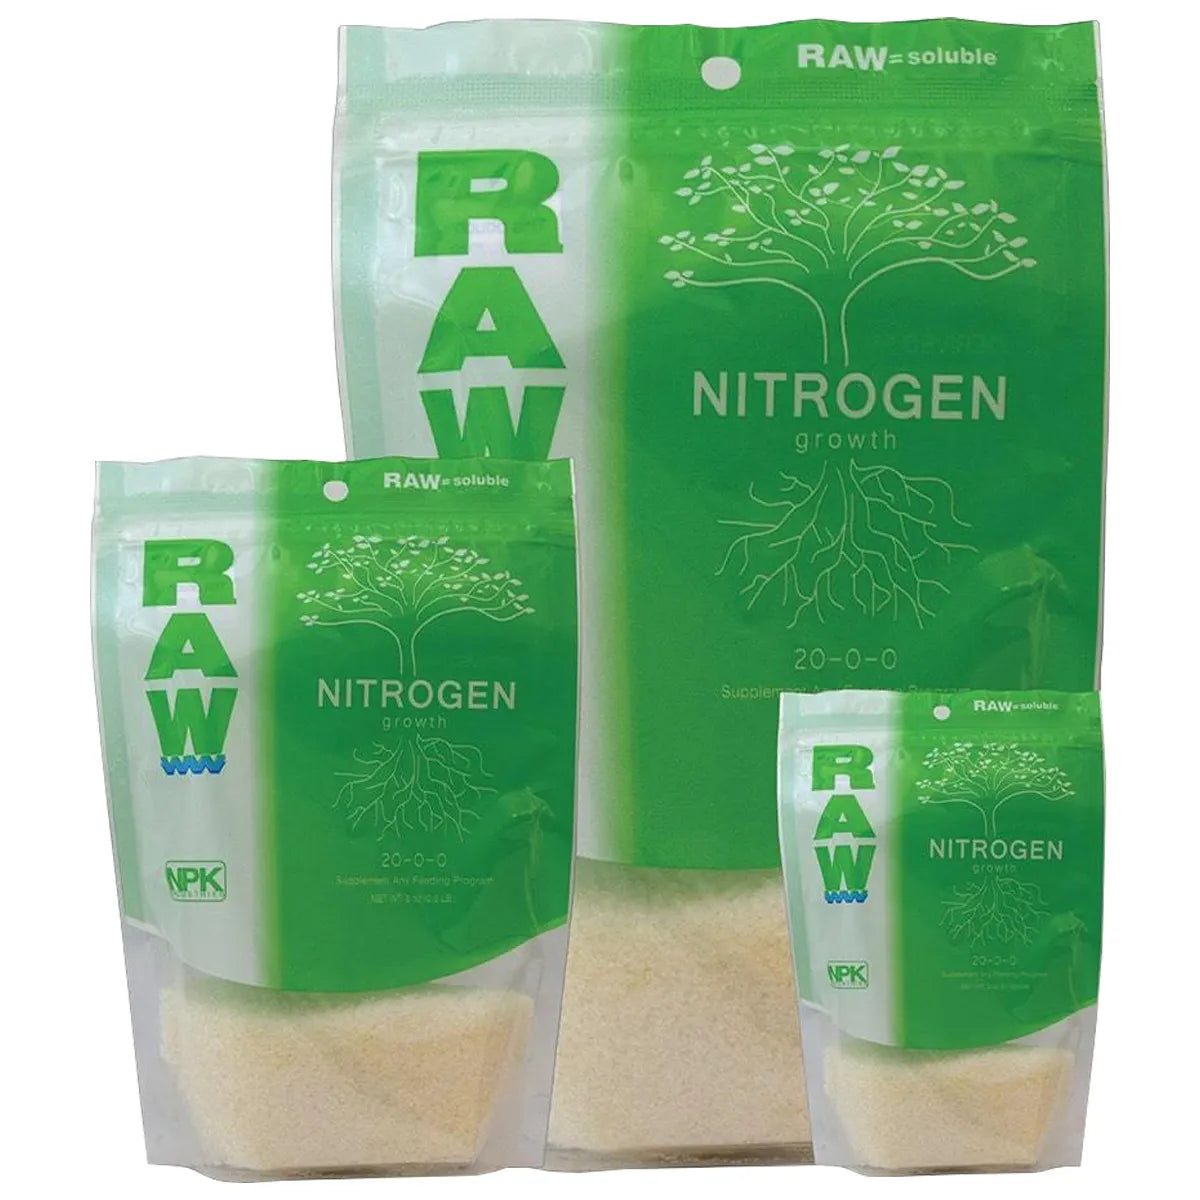 Raw Nutrients - Nitrogen